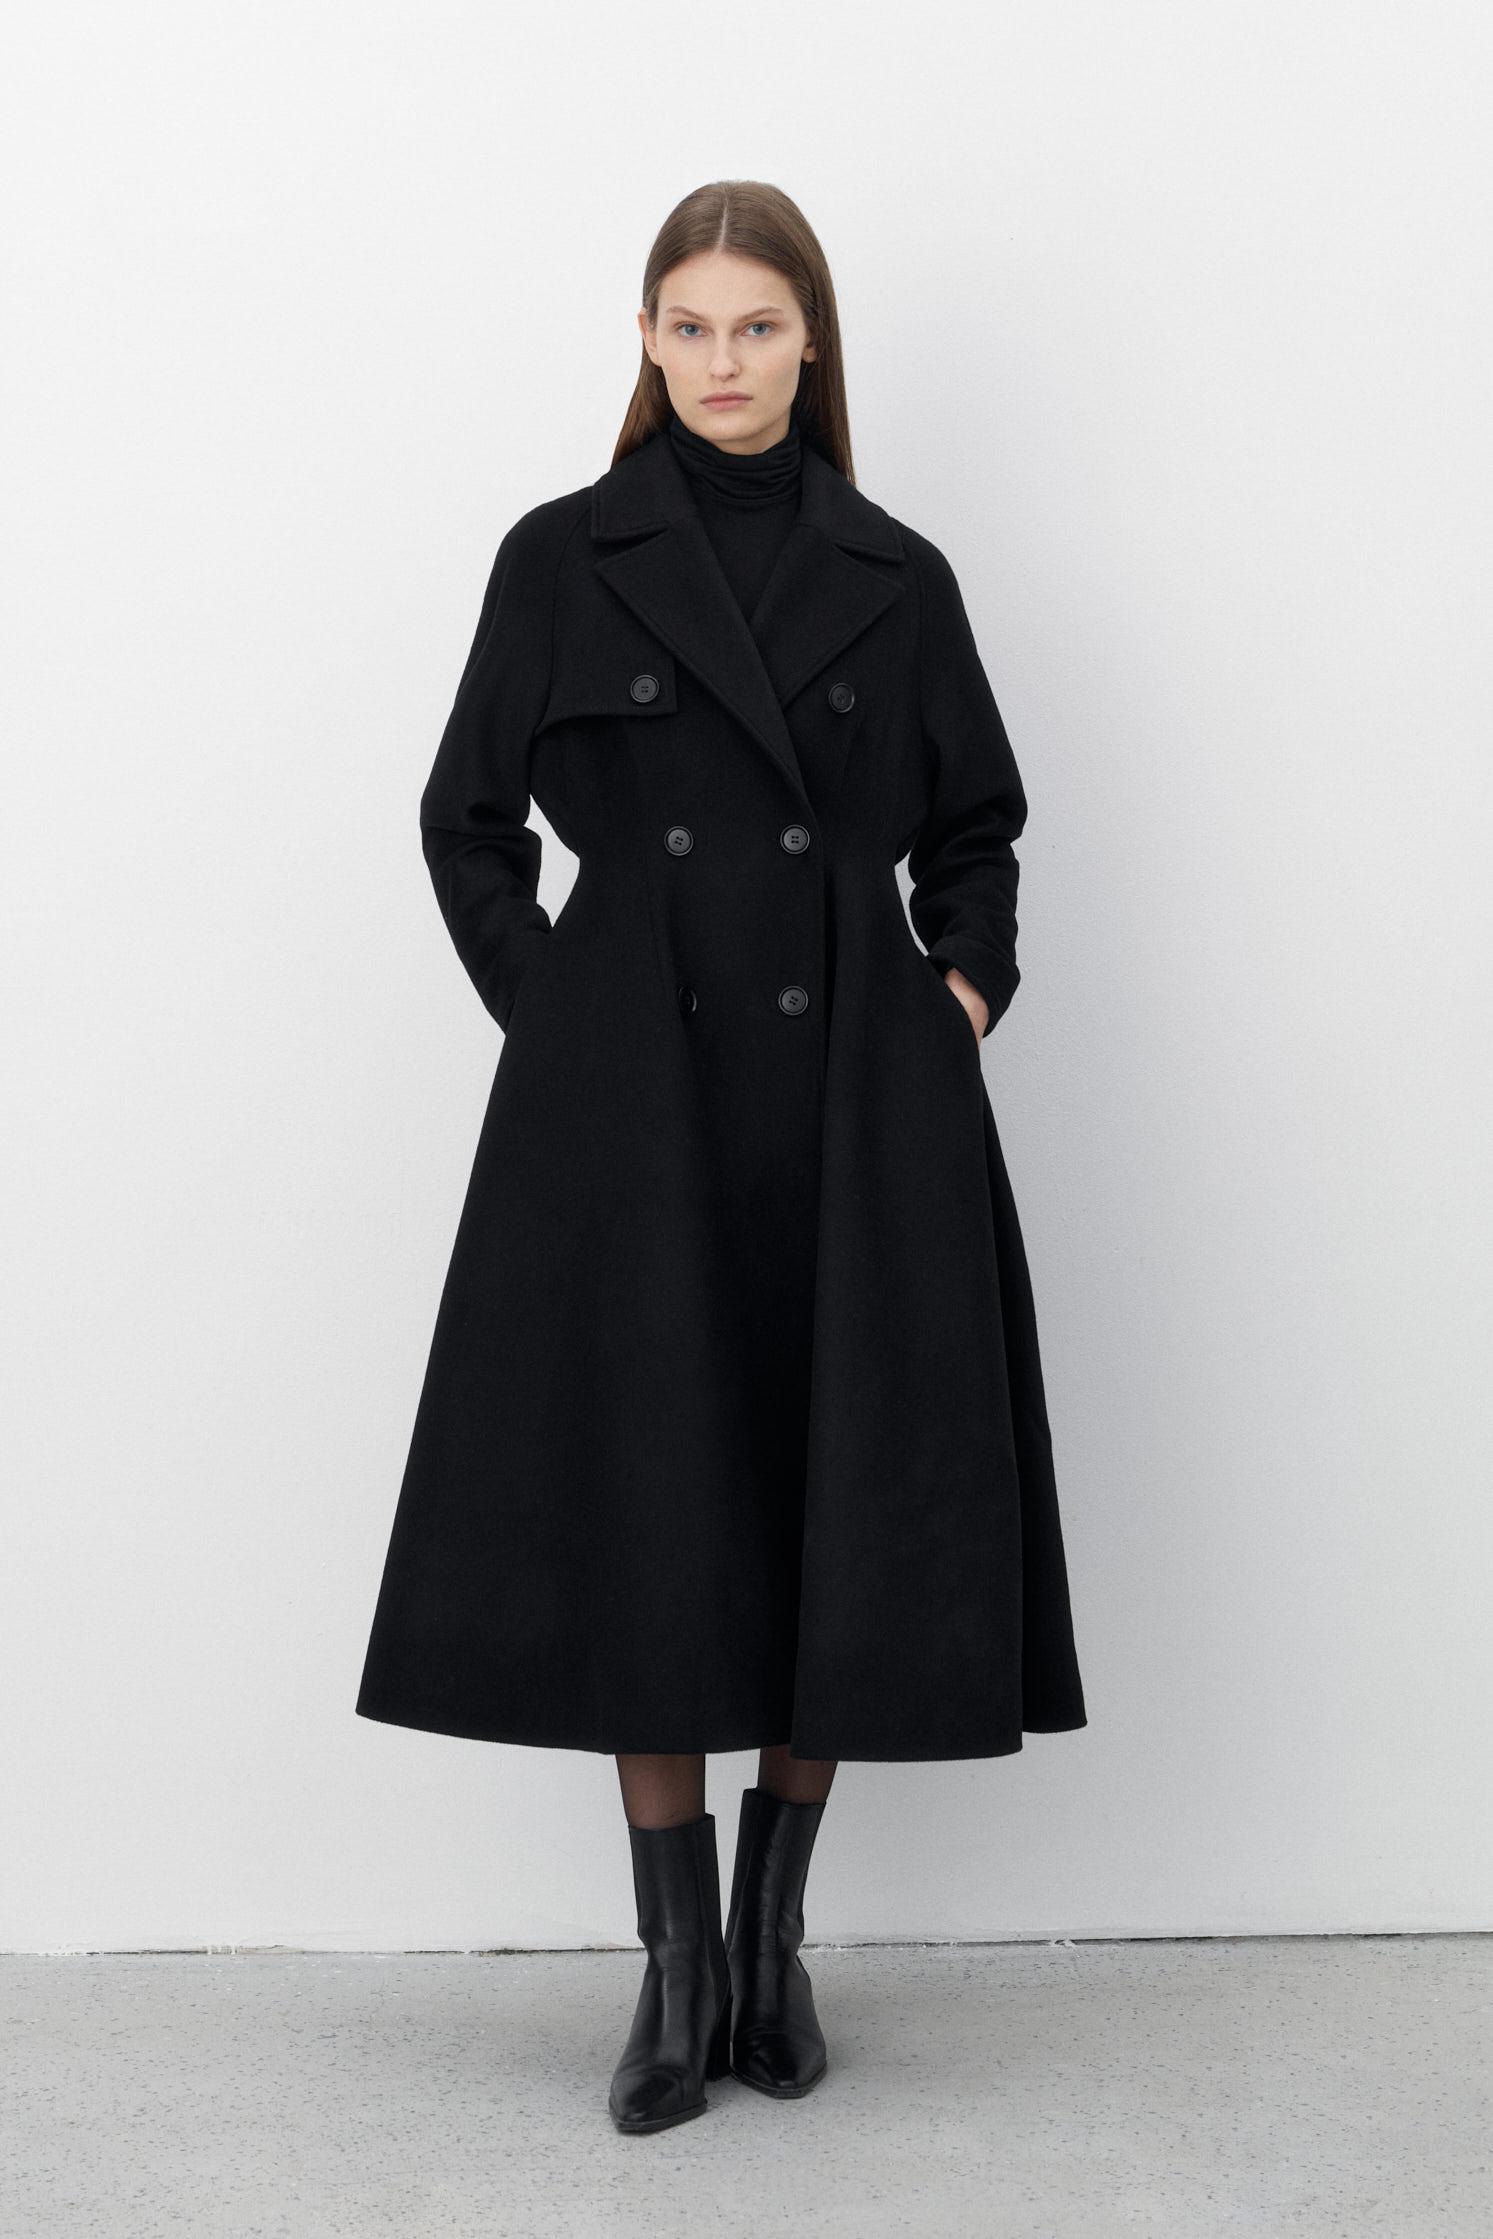 Пальто New Look, La Darique, 75 000 руб. (ladarique.com)